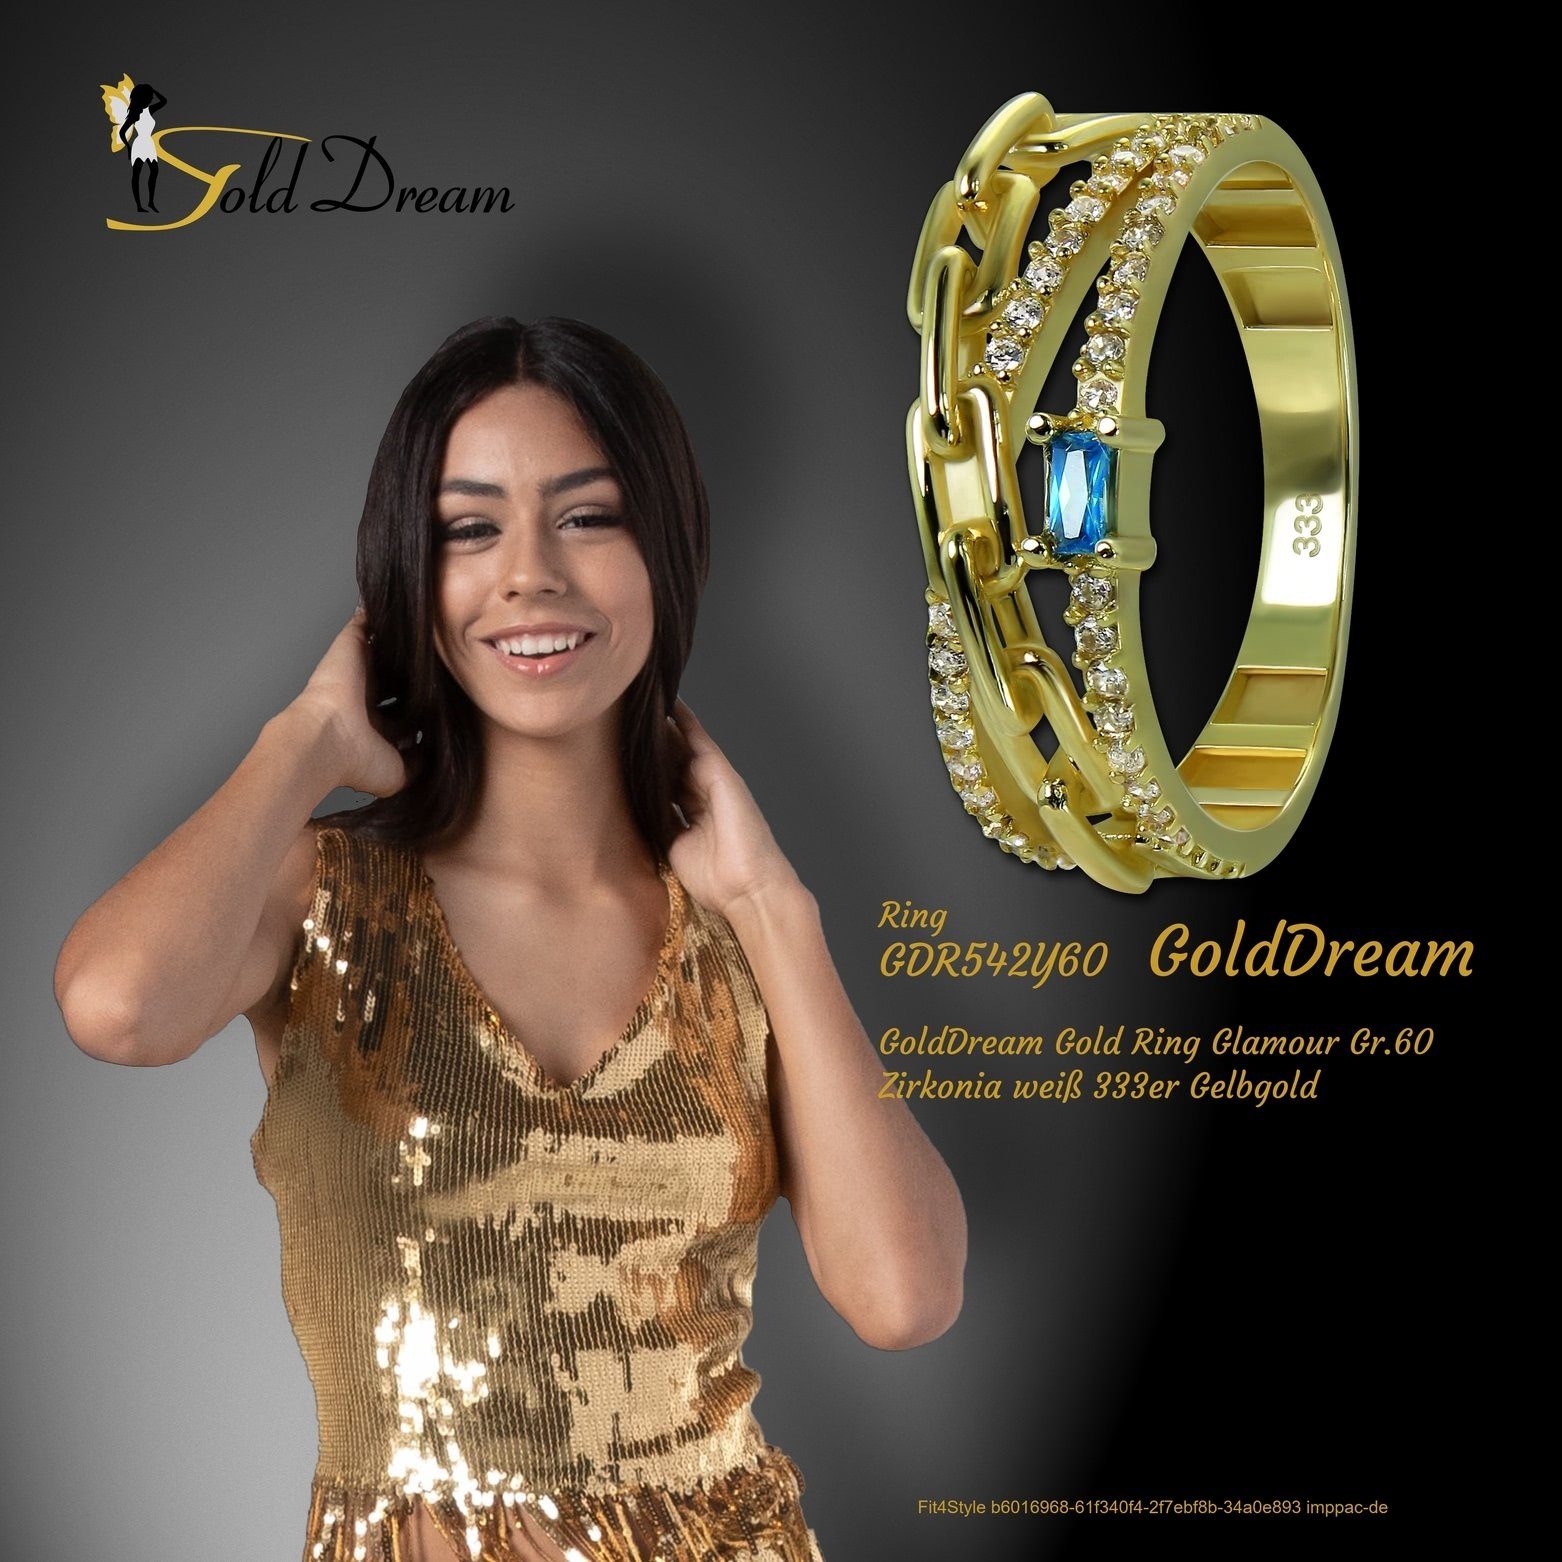 GoldDream Glamour (Fingerring), Ring gold, Gold hellblau Farbe: Gelbgold 333 Karat, weiß, Glamour Goldring - 8 Damen Ring GoldDream Gr.60